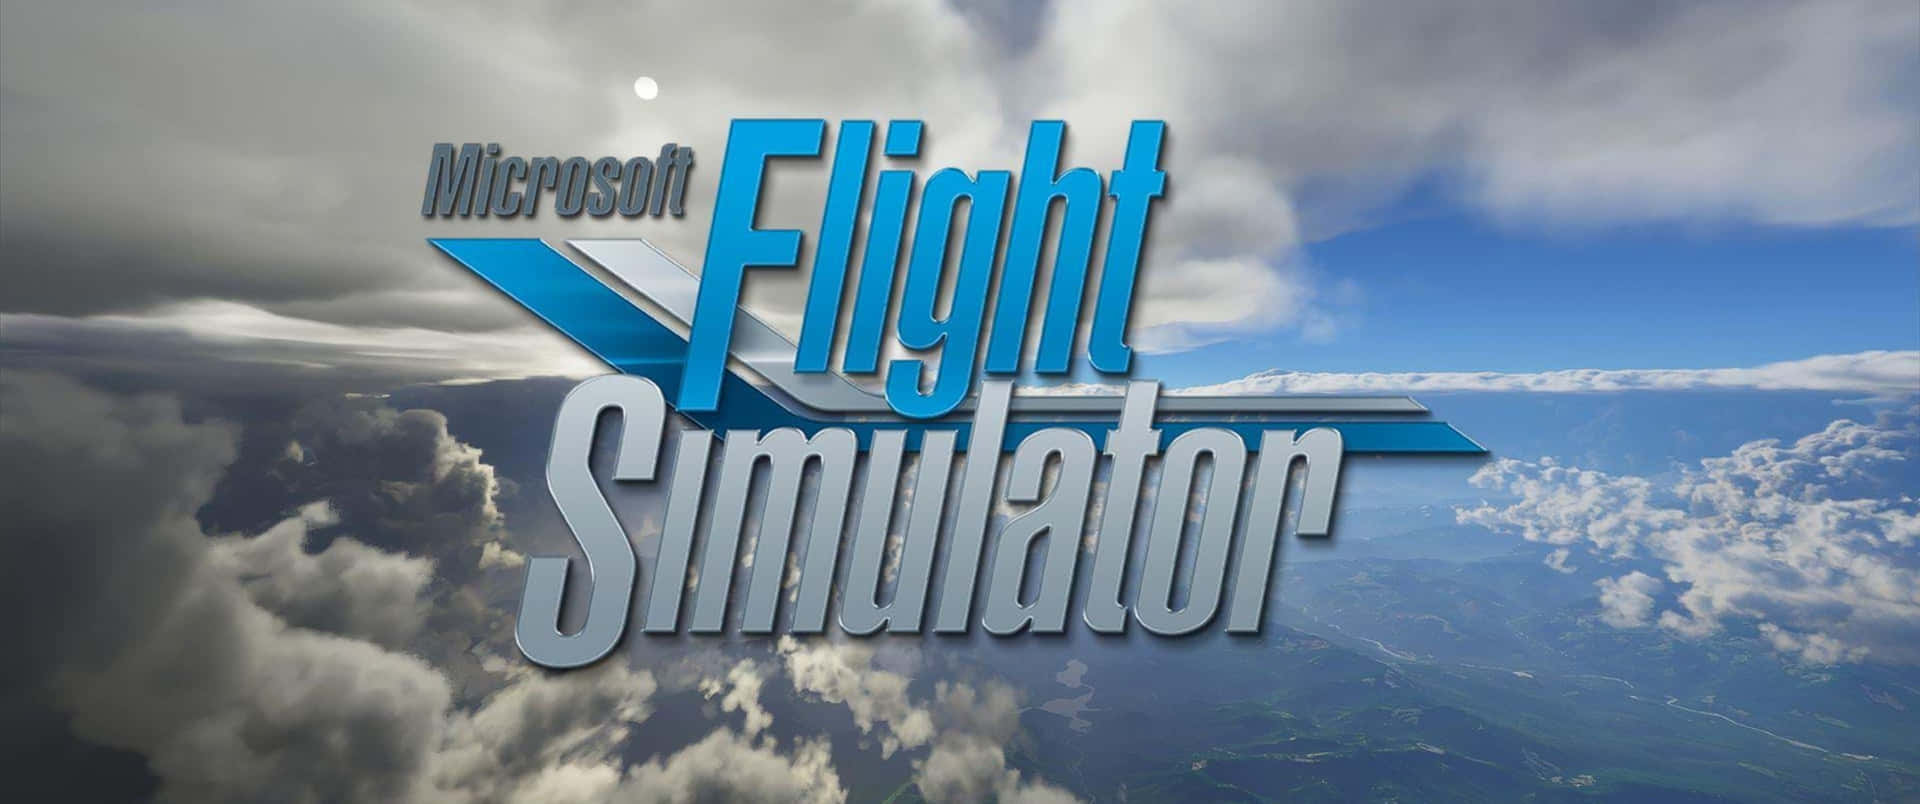 Explorael Mundo Con Microsoft Flight Simulator.